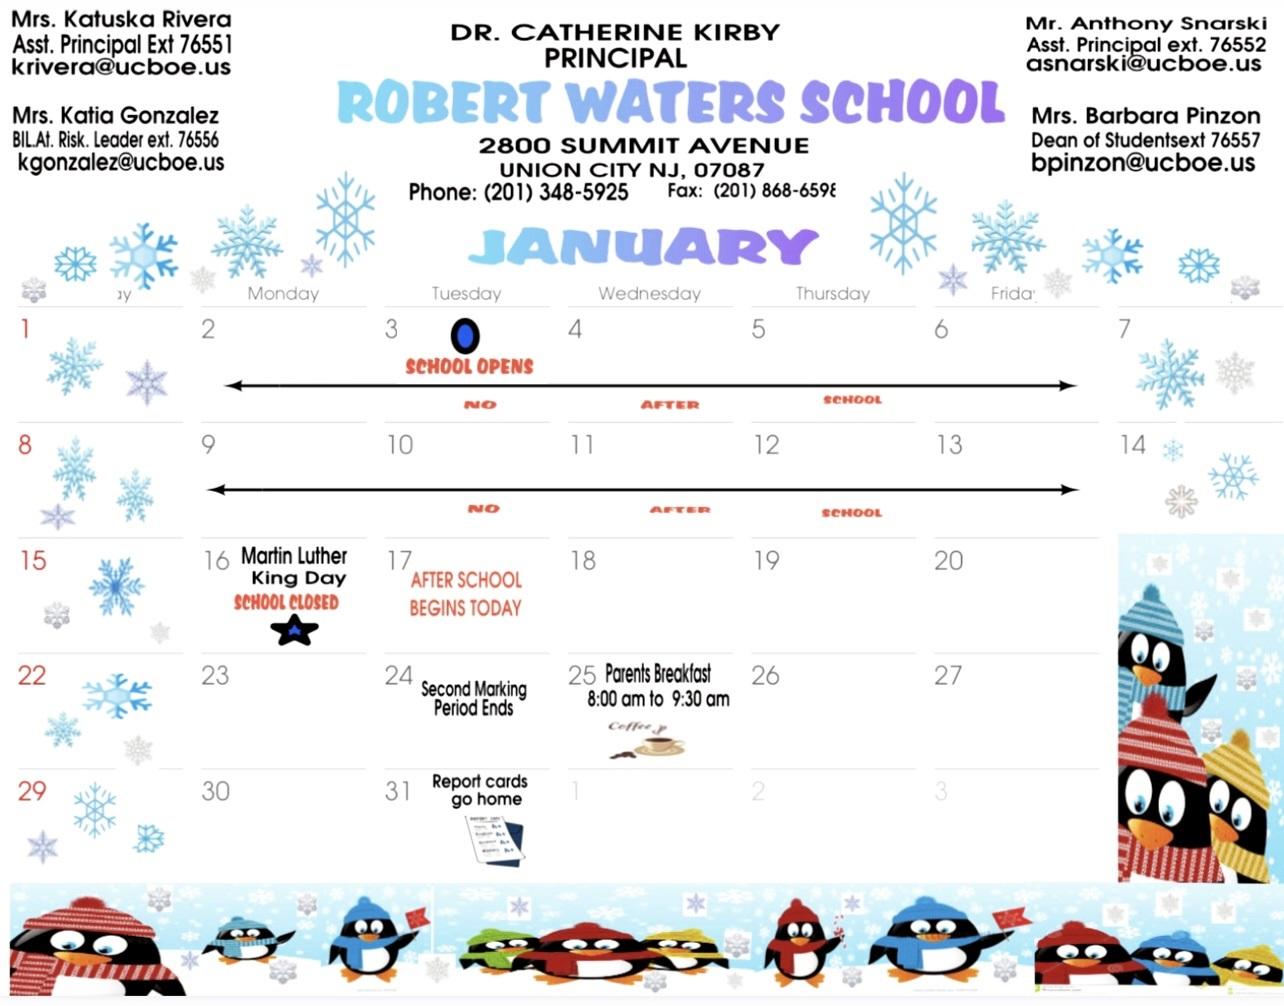 January 2023 Calendar-Robert Waters School